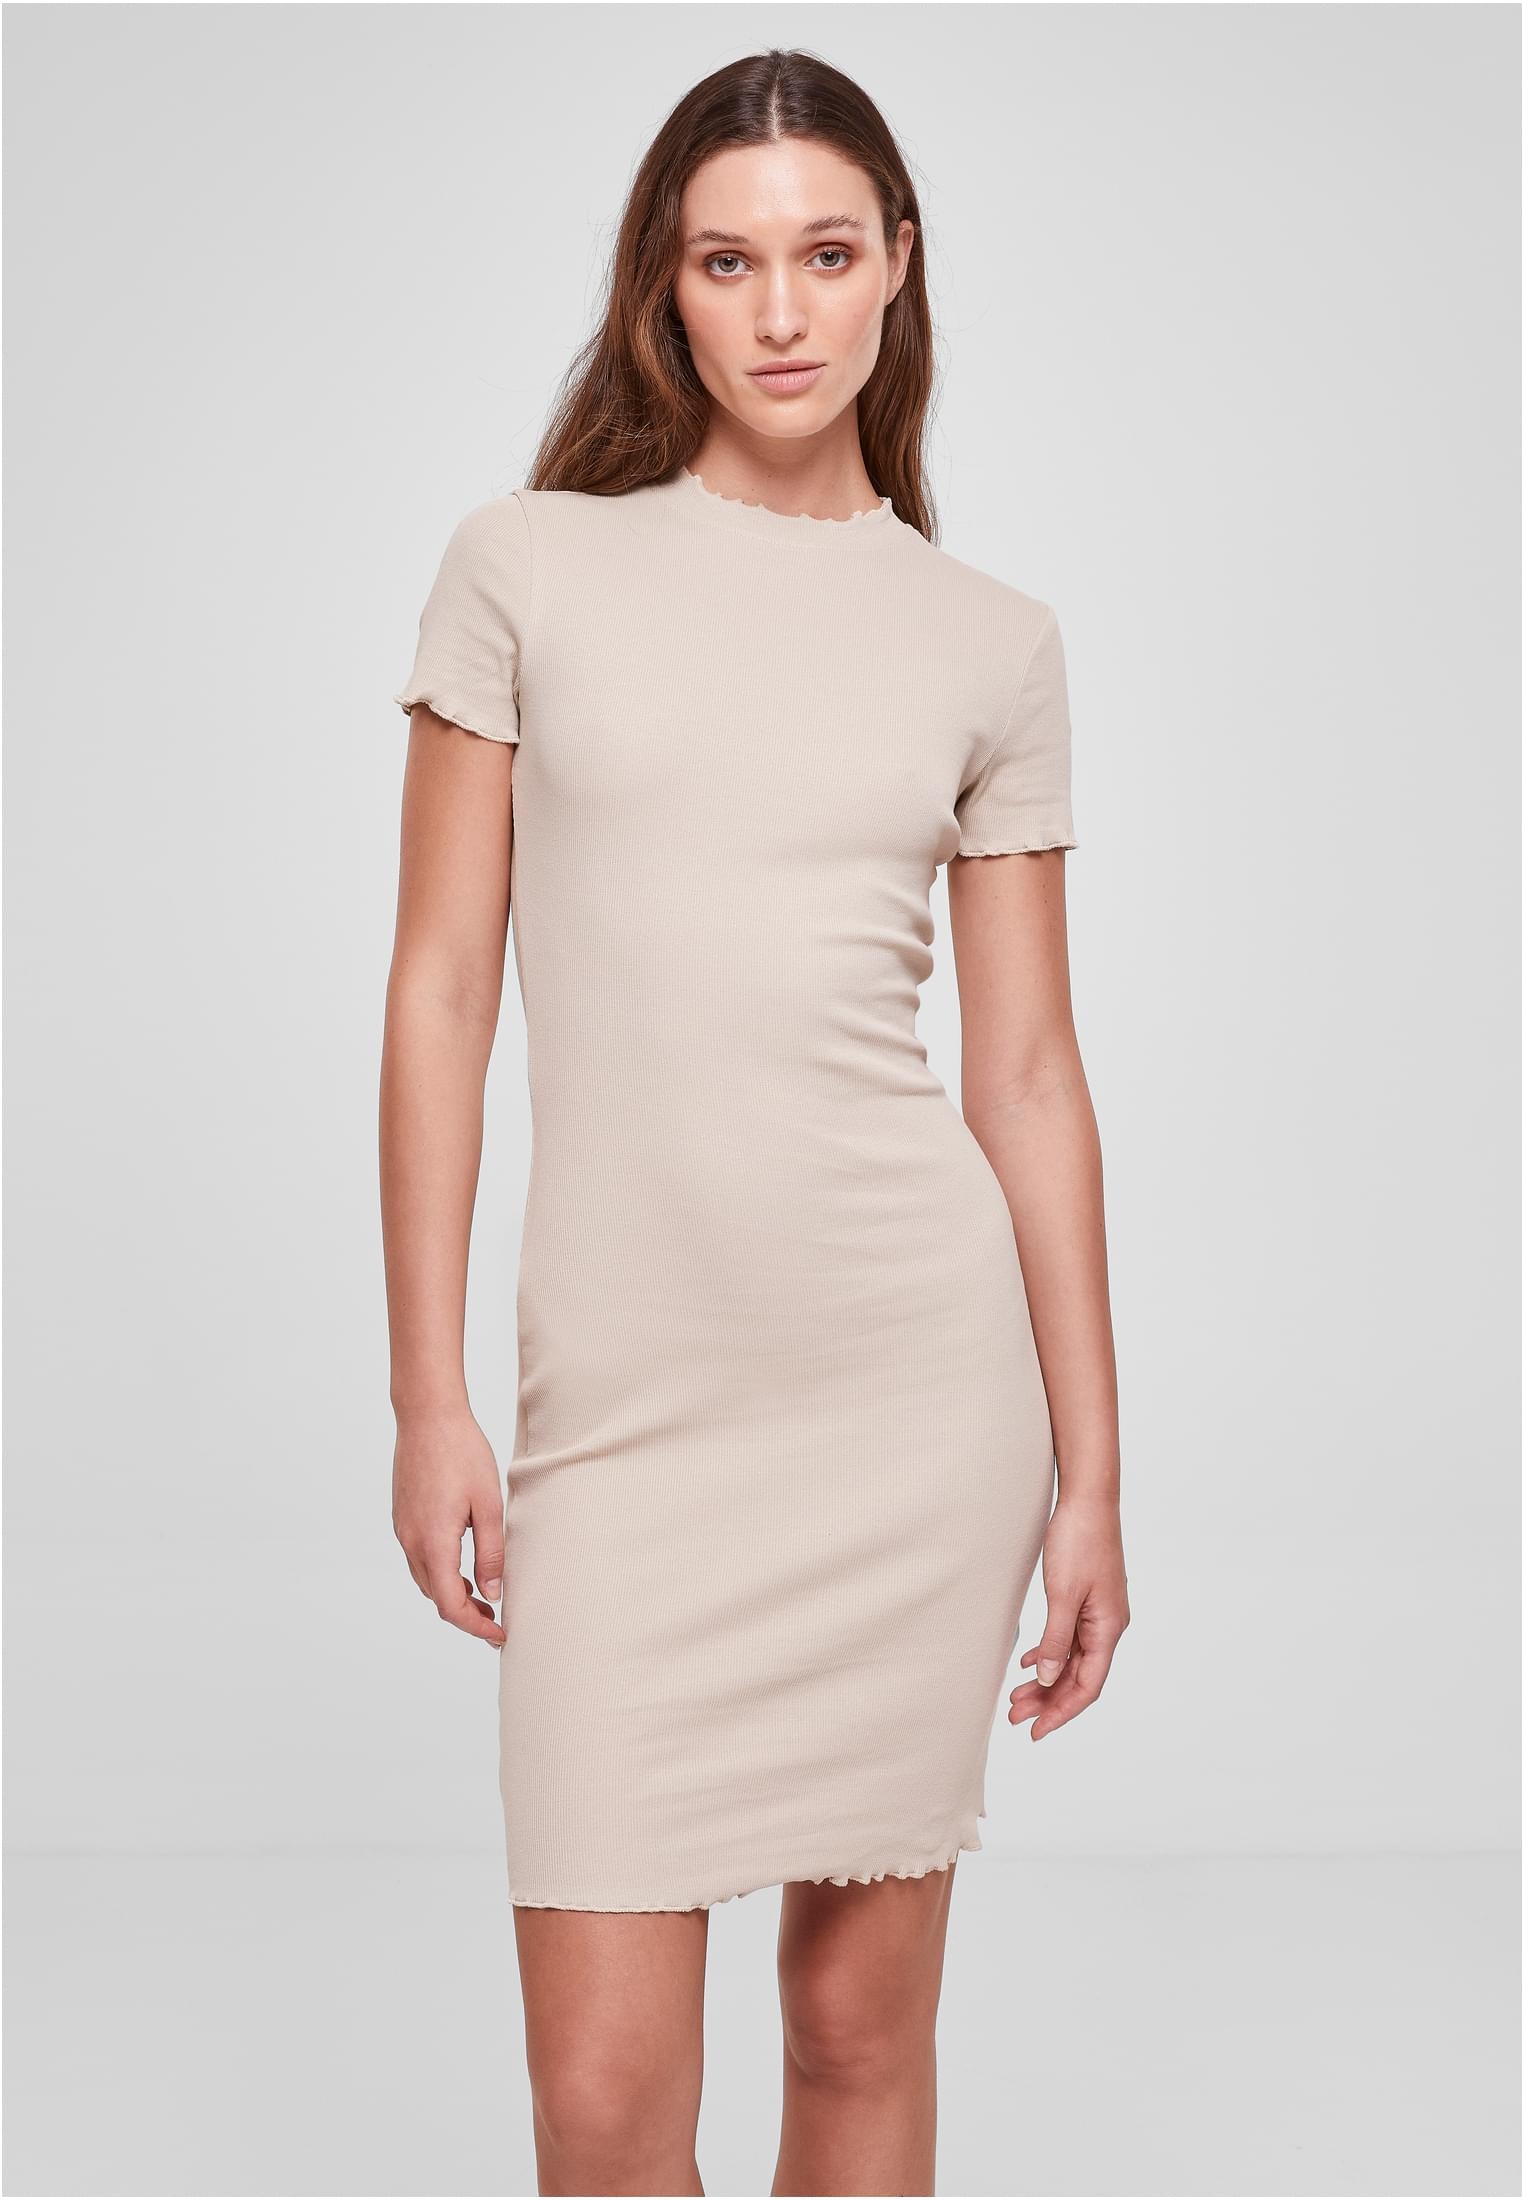 URBAN CLASSICS Jerseykleid »Damen Ladies Rib kaufen | BAUR (1 Dress«, Tee online tlg.)